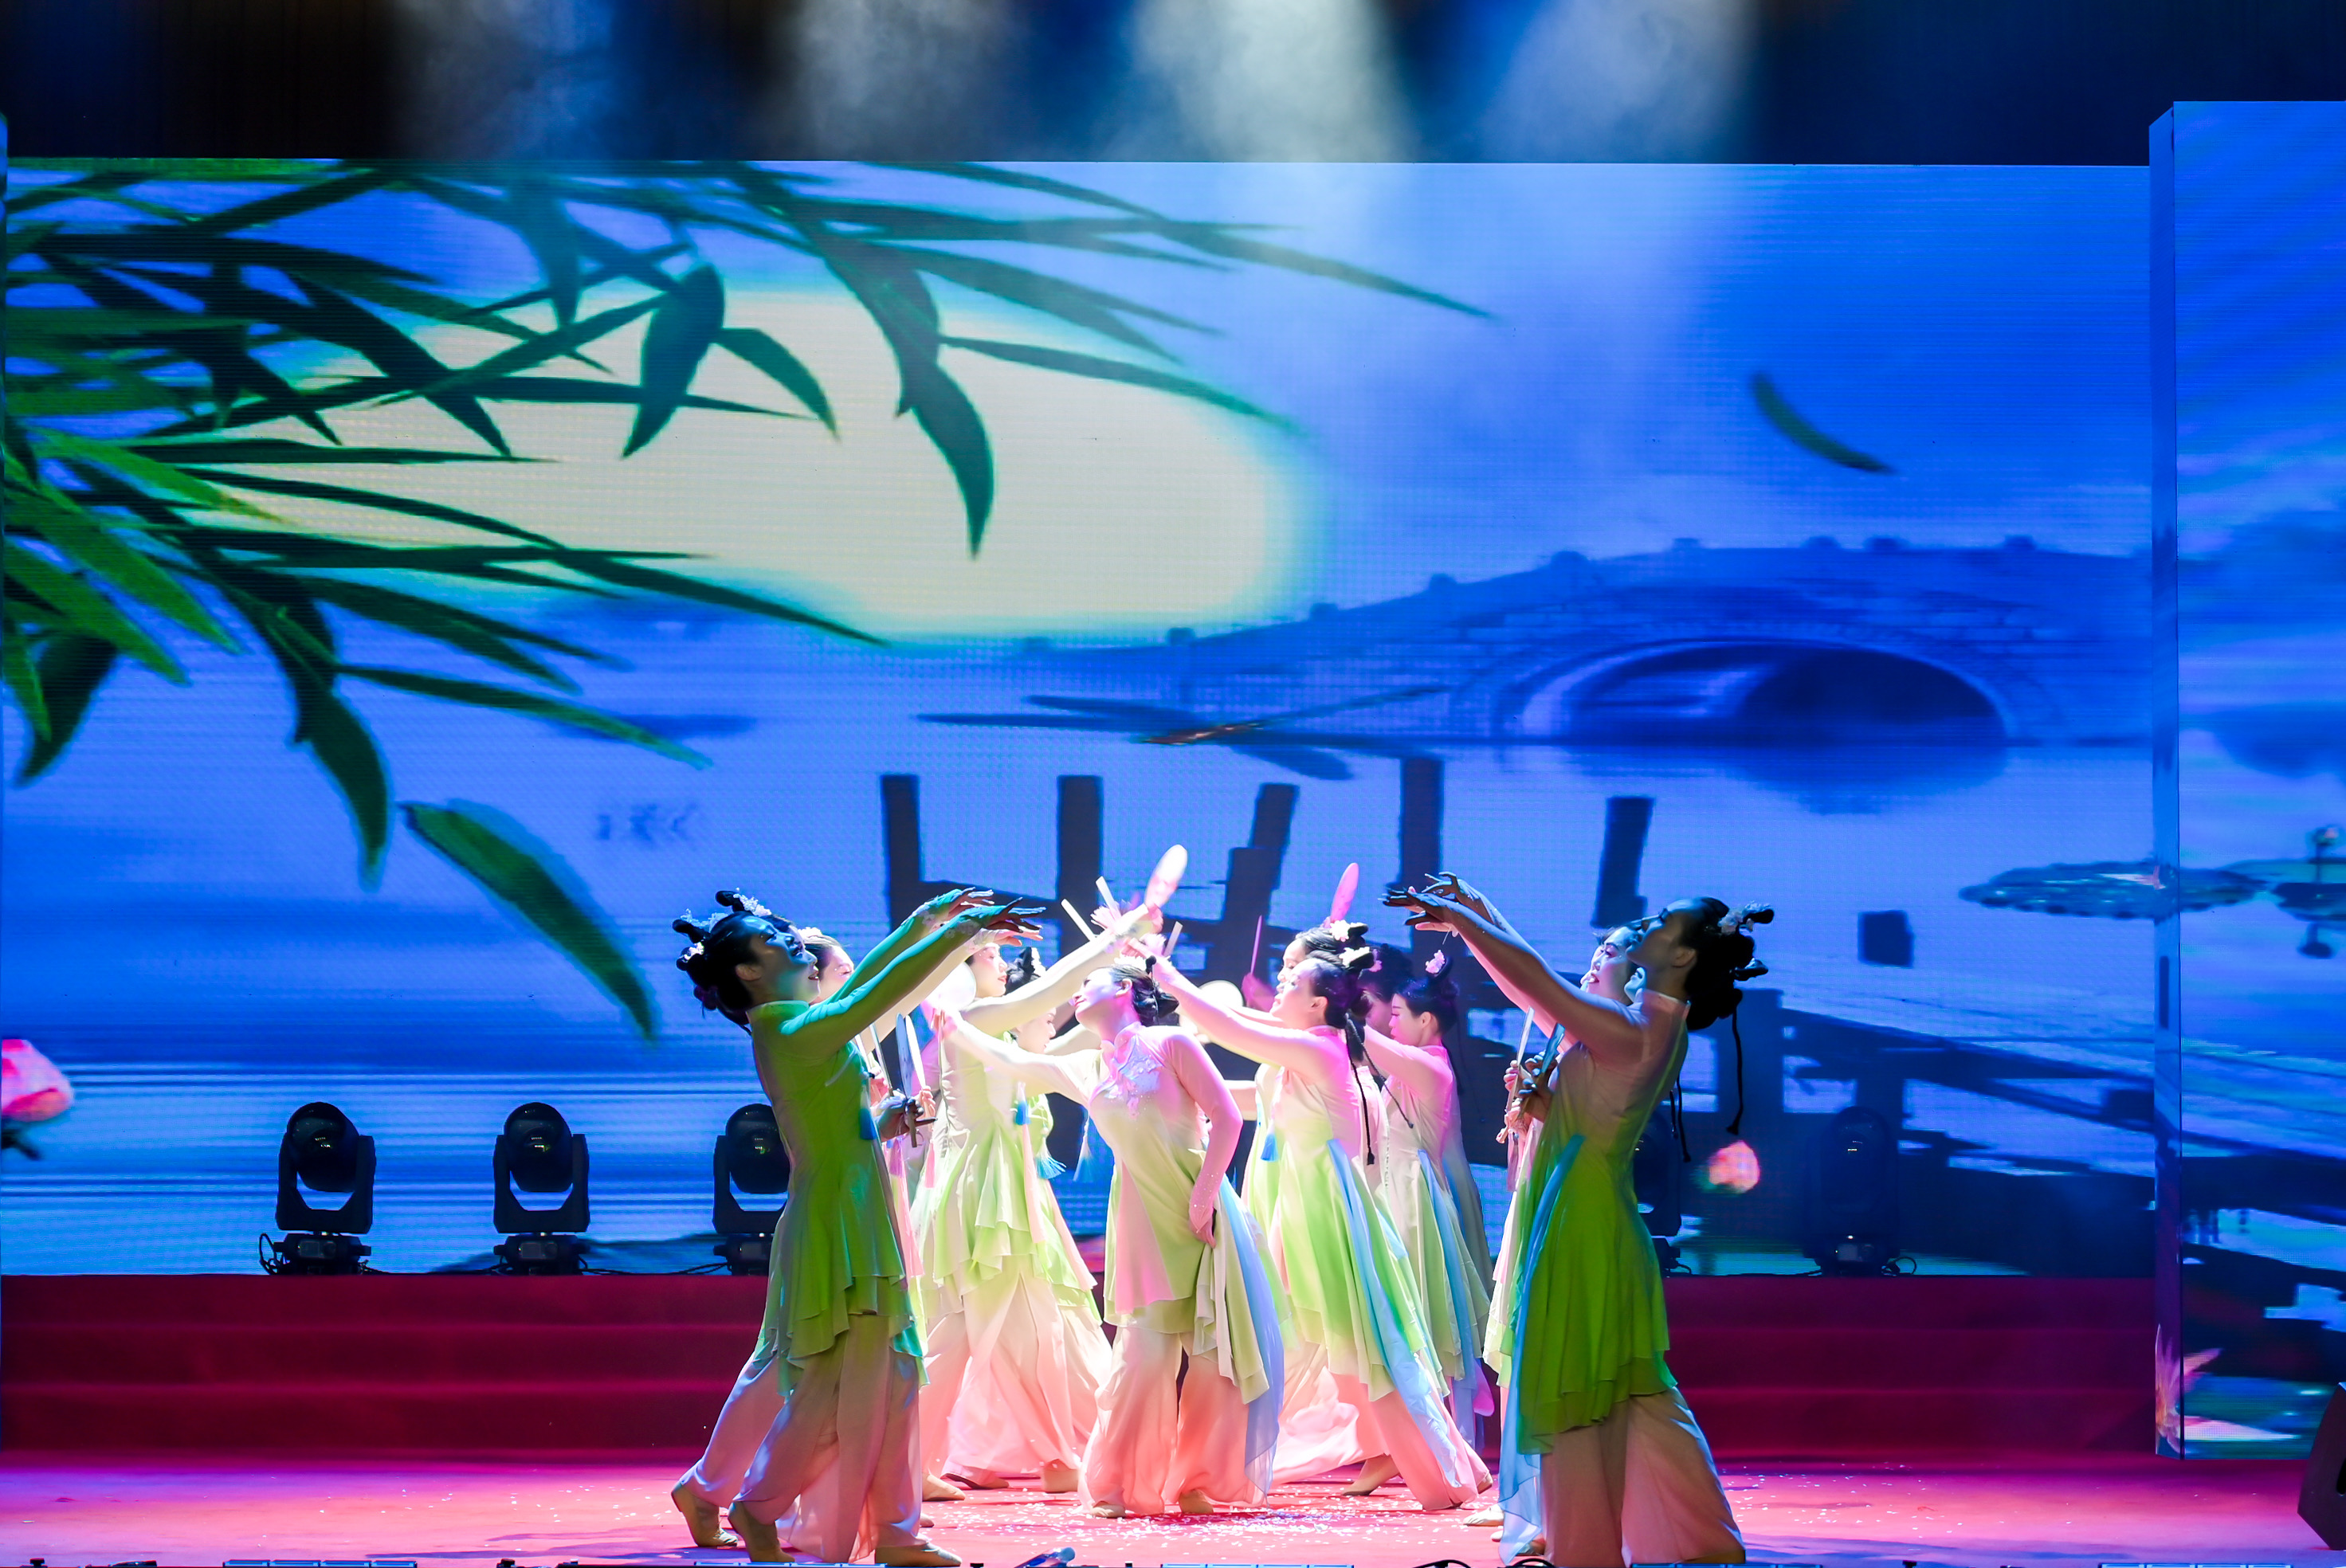 Gala performance celebrating Chinese New Year held in Longwan